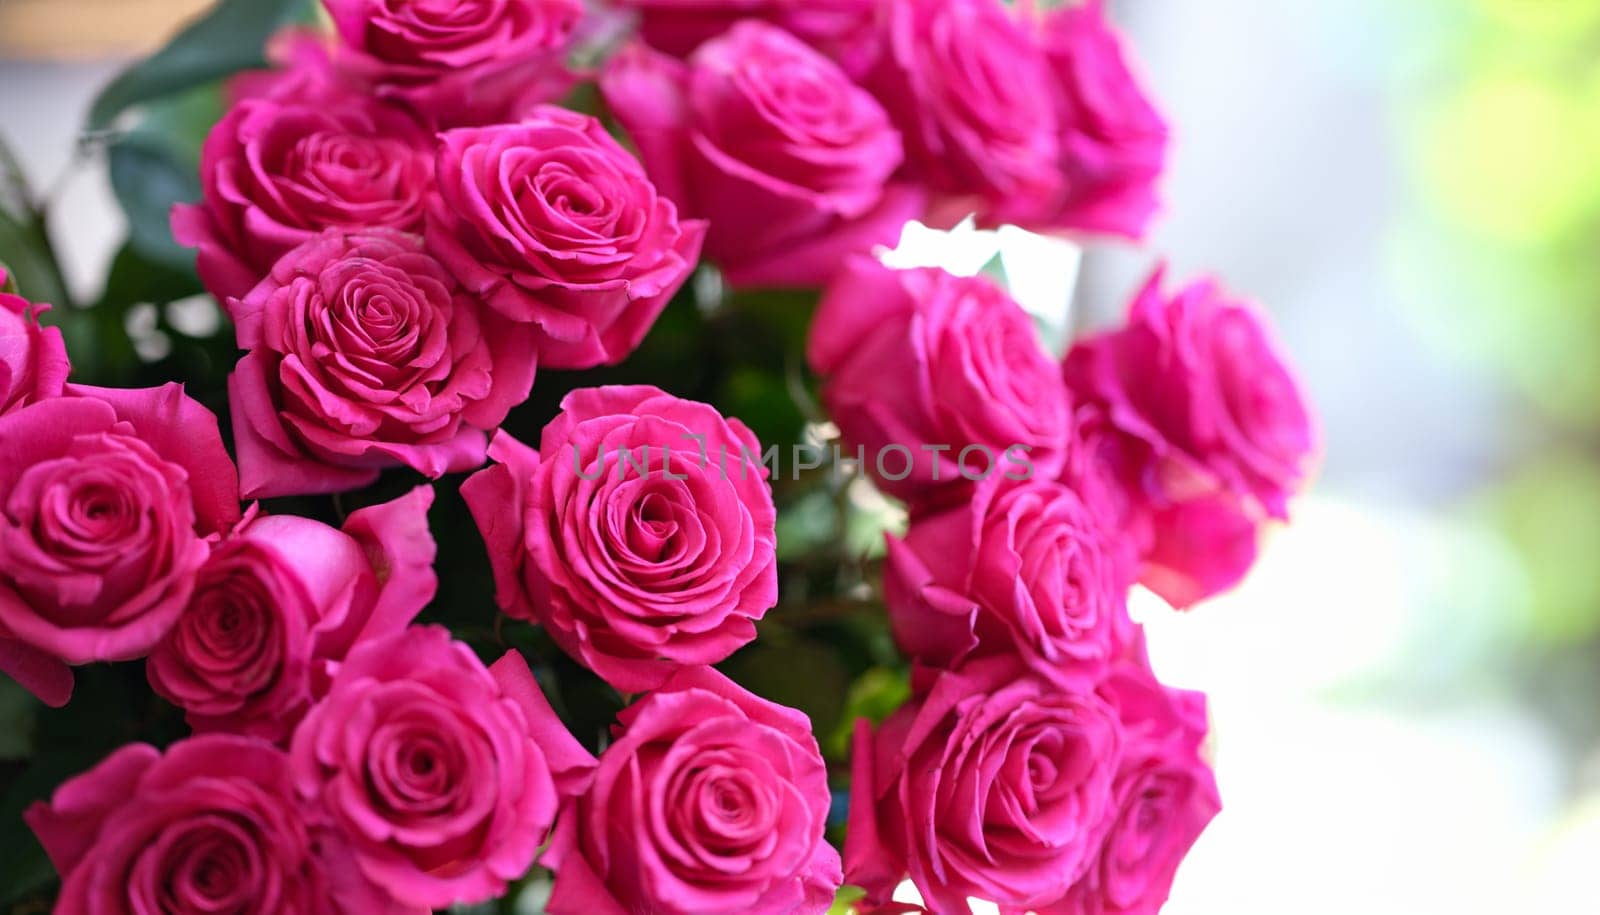 Closeup of large bouquet of pink roses. Floristics concept